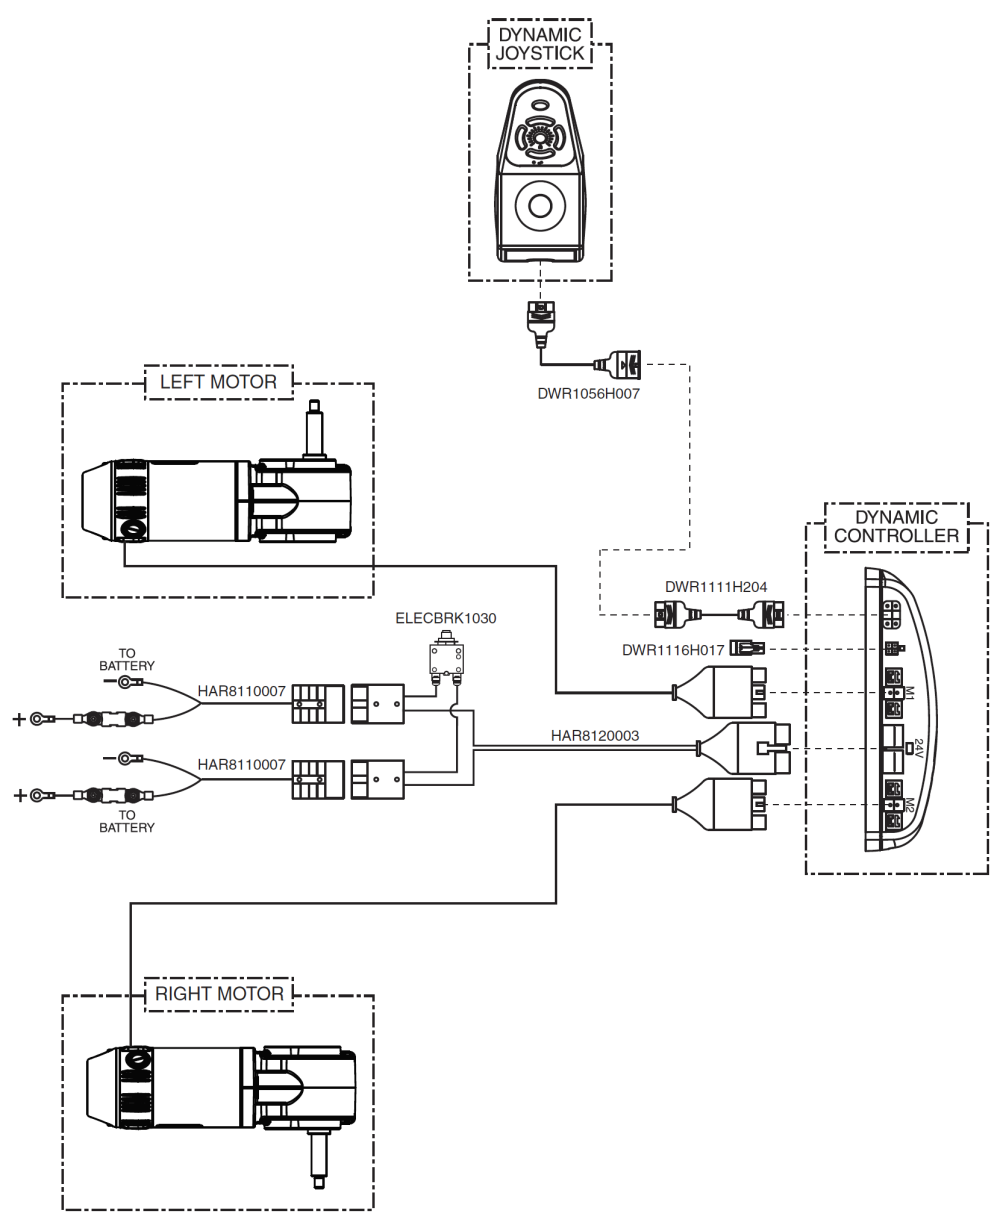 Dynamic Electrical System Diagram, Elite Hd parts diagram